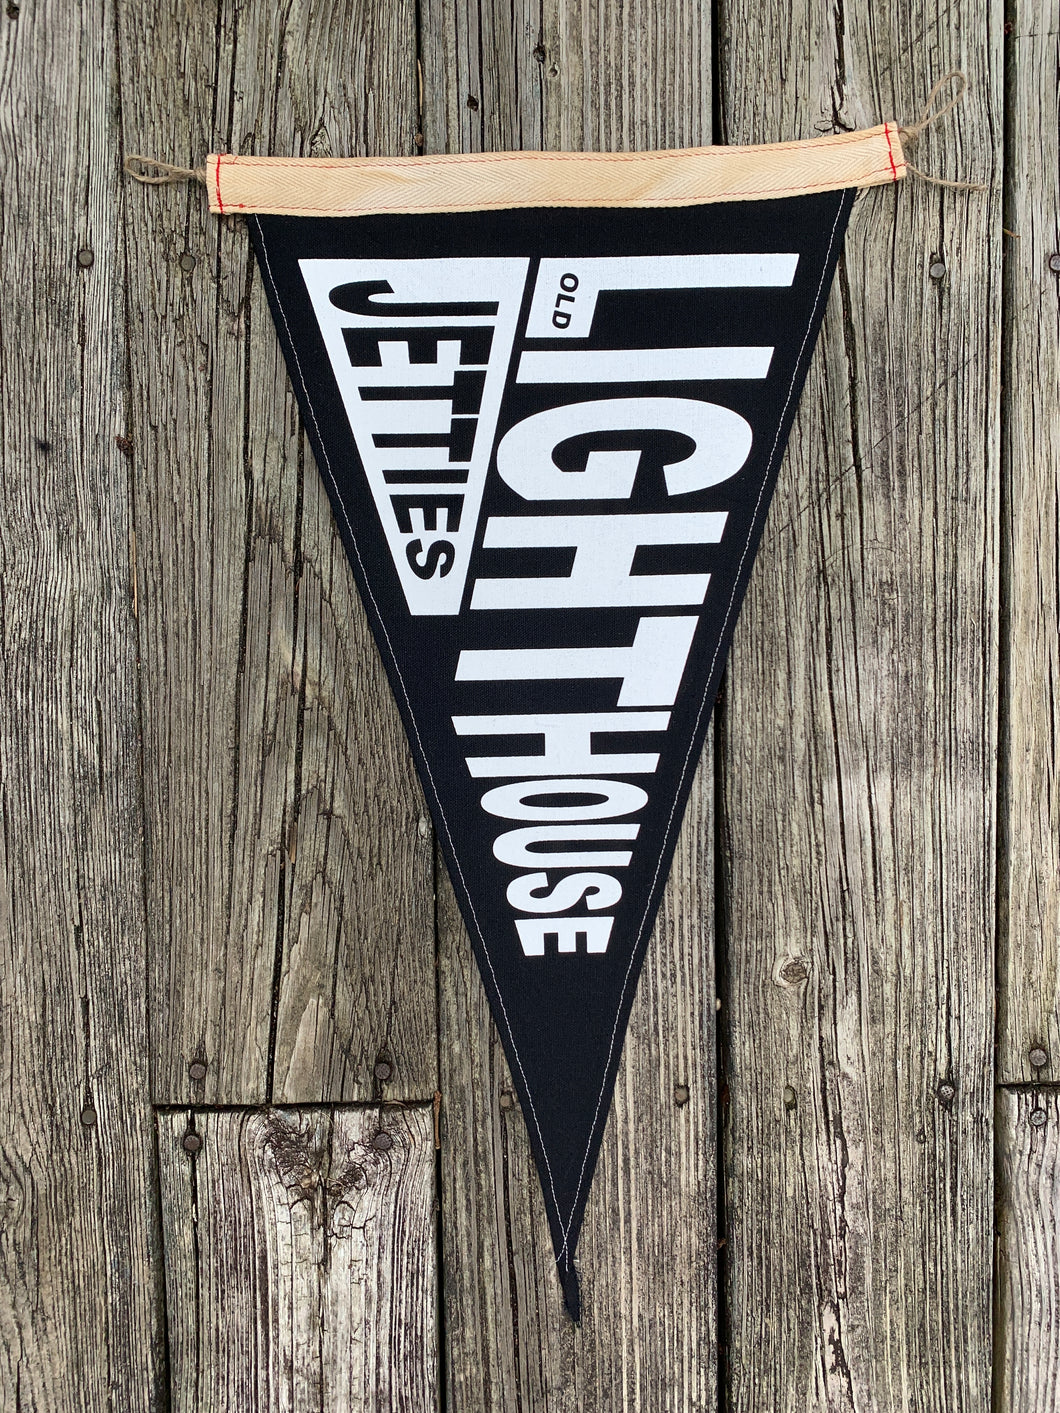 Pennant - Beach Flag - Old Lighthouse Jetty OBX